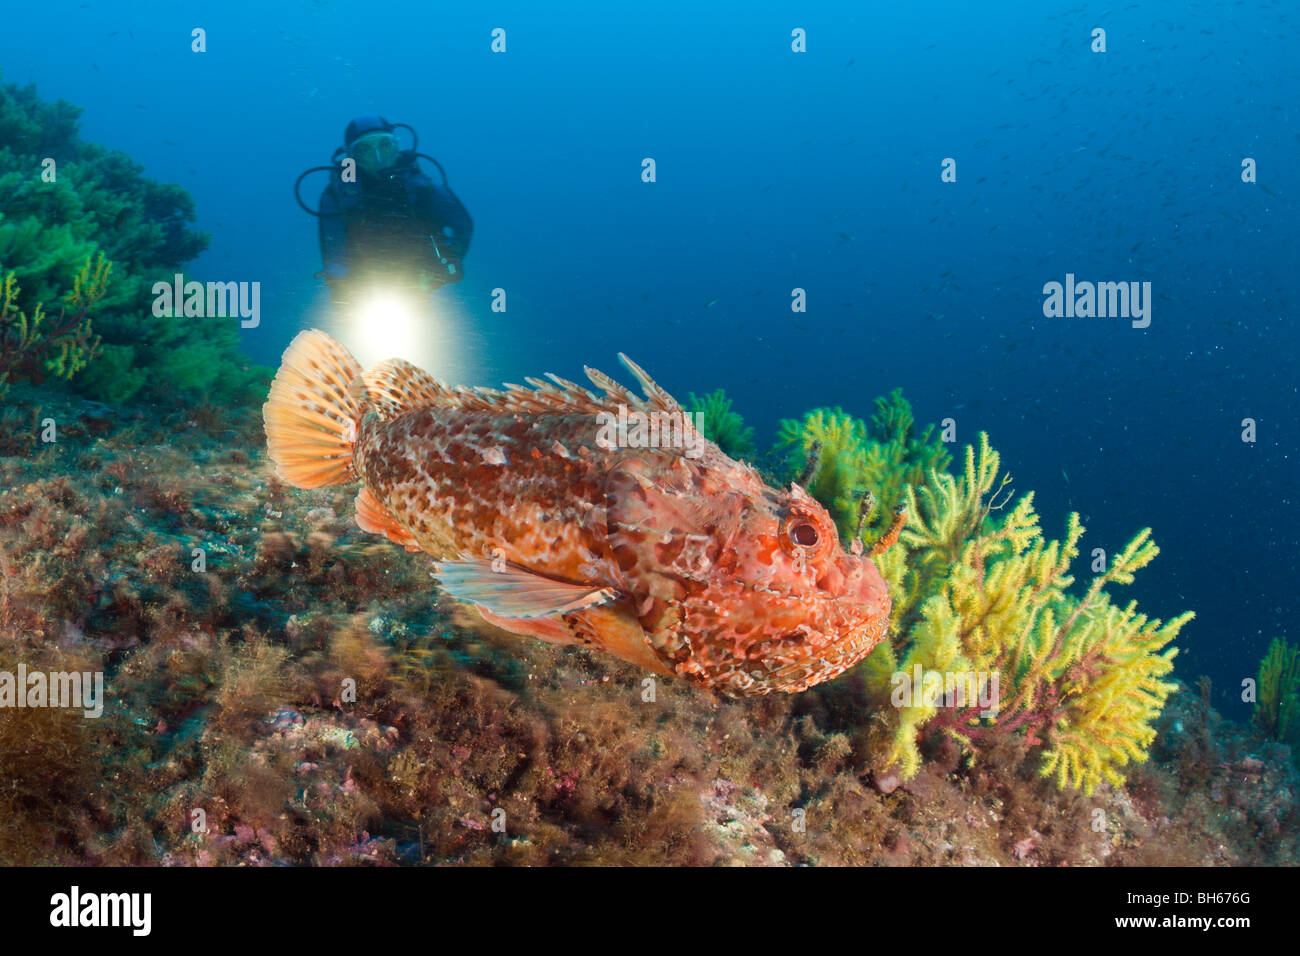 Great Rockfish and Scuba Diver, Scorpaena scrofa, Tamariu, Costa Brava, Mediterranean Sea, Spain Stock Photo